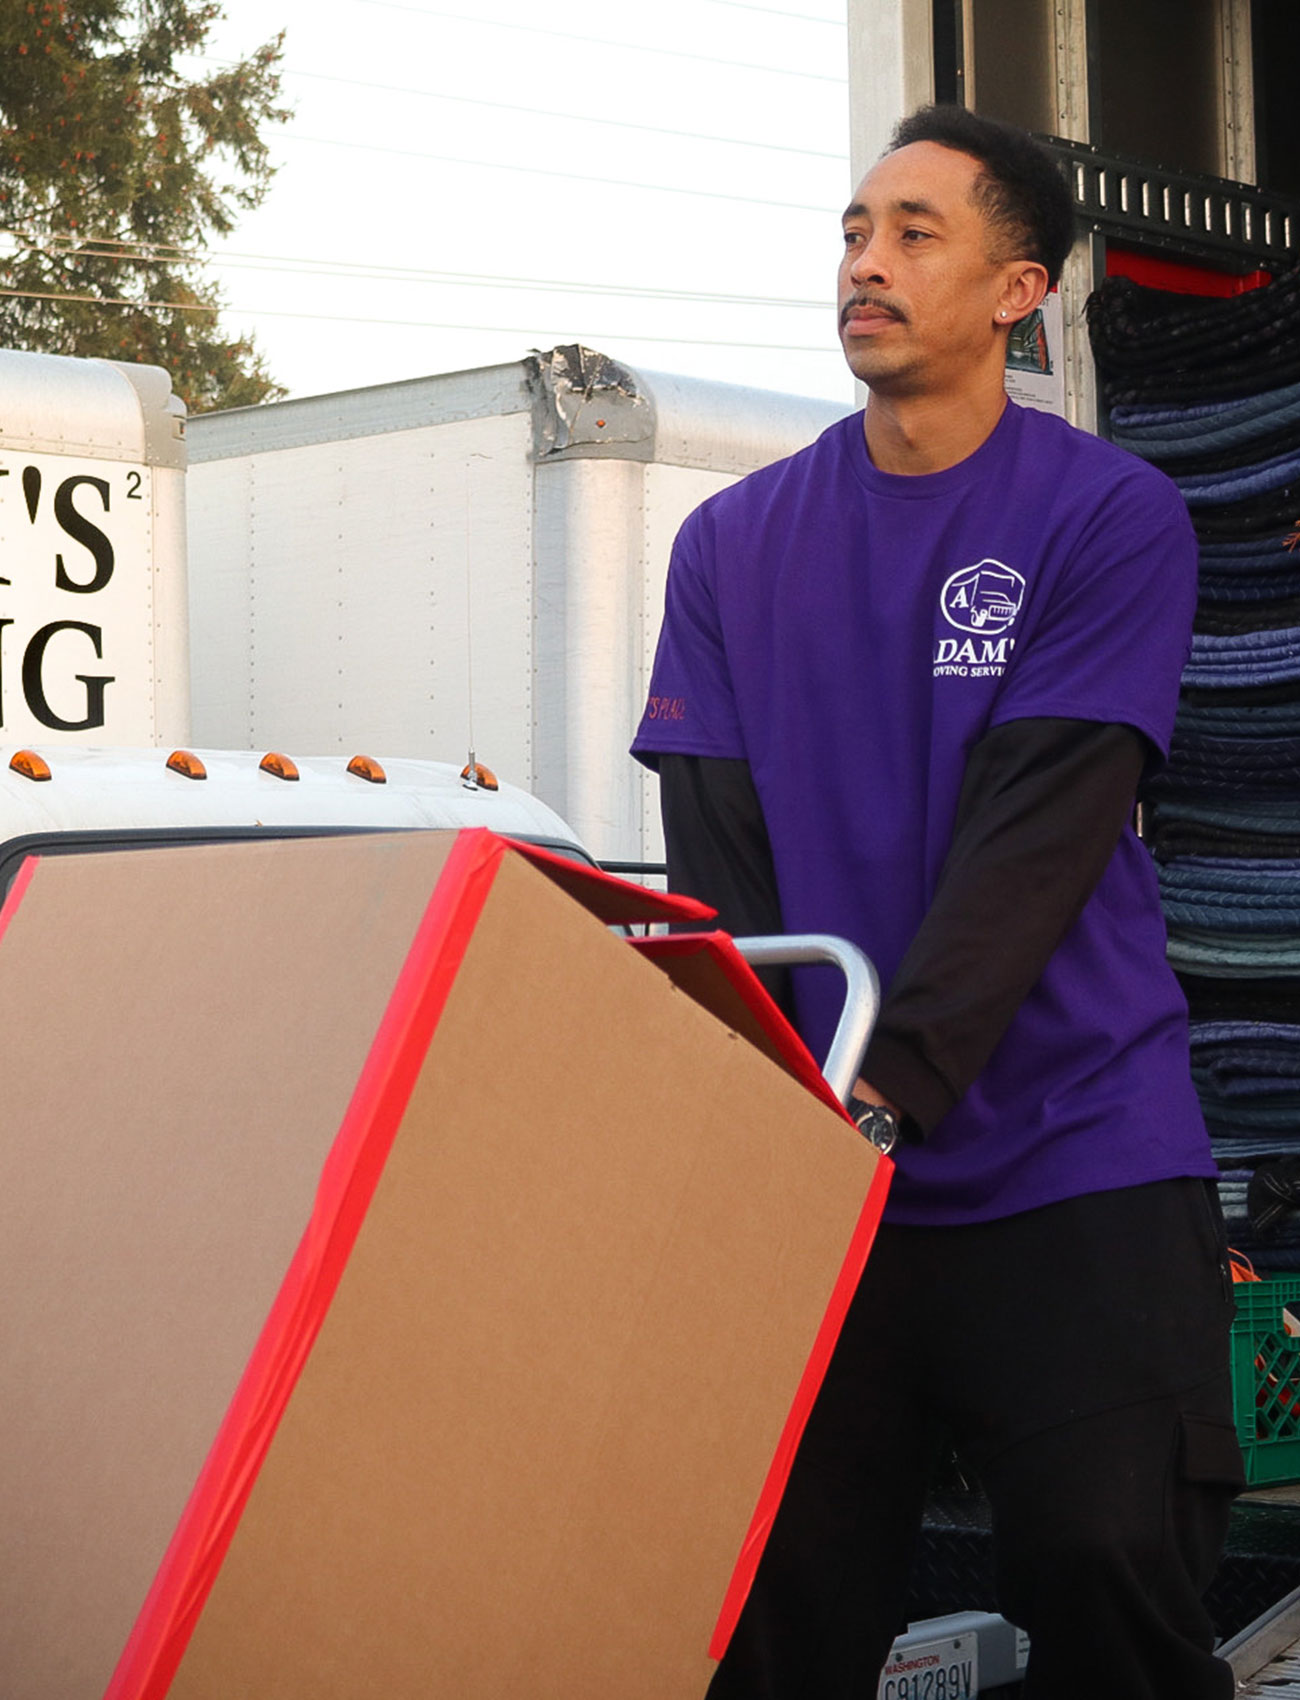 Quality Moving Company Near Me | Adams Moving Service